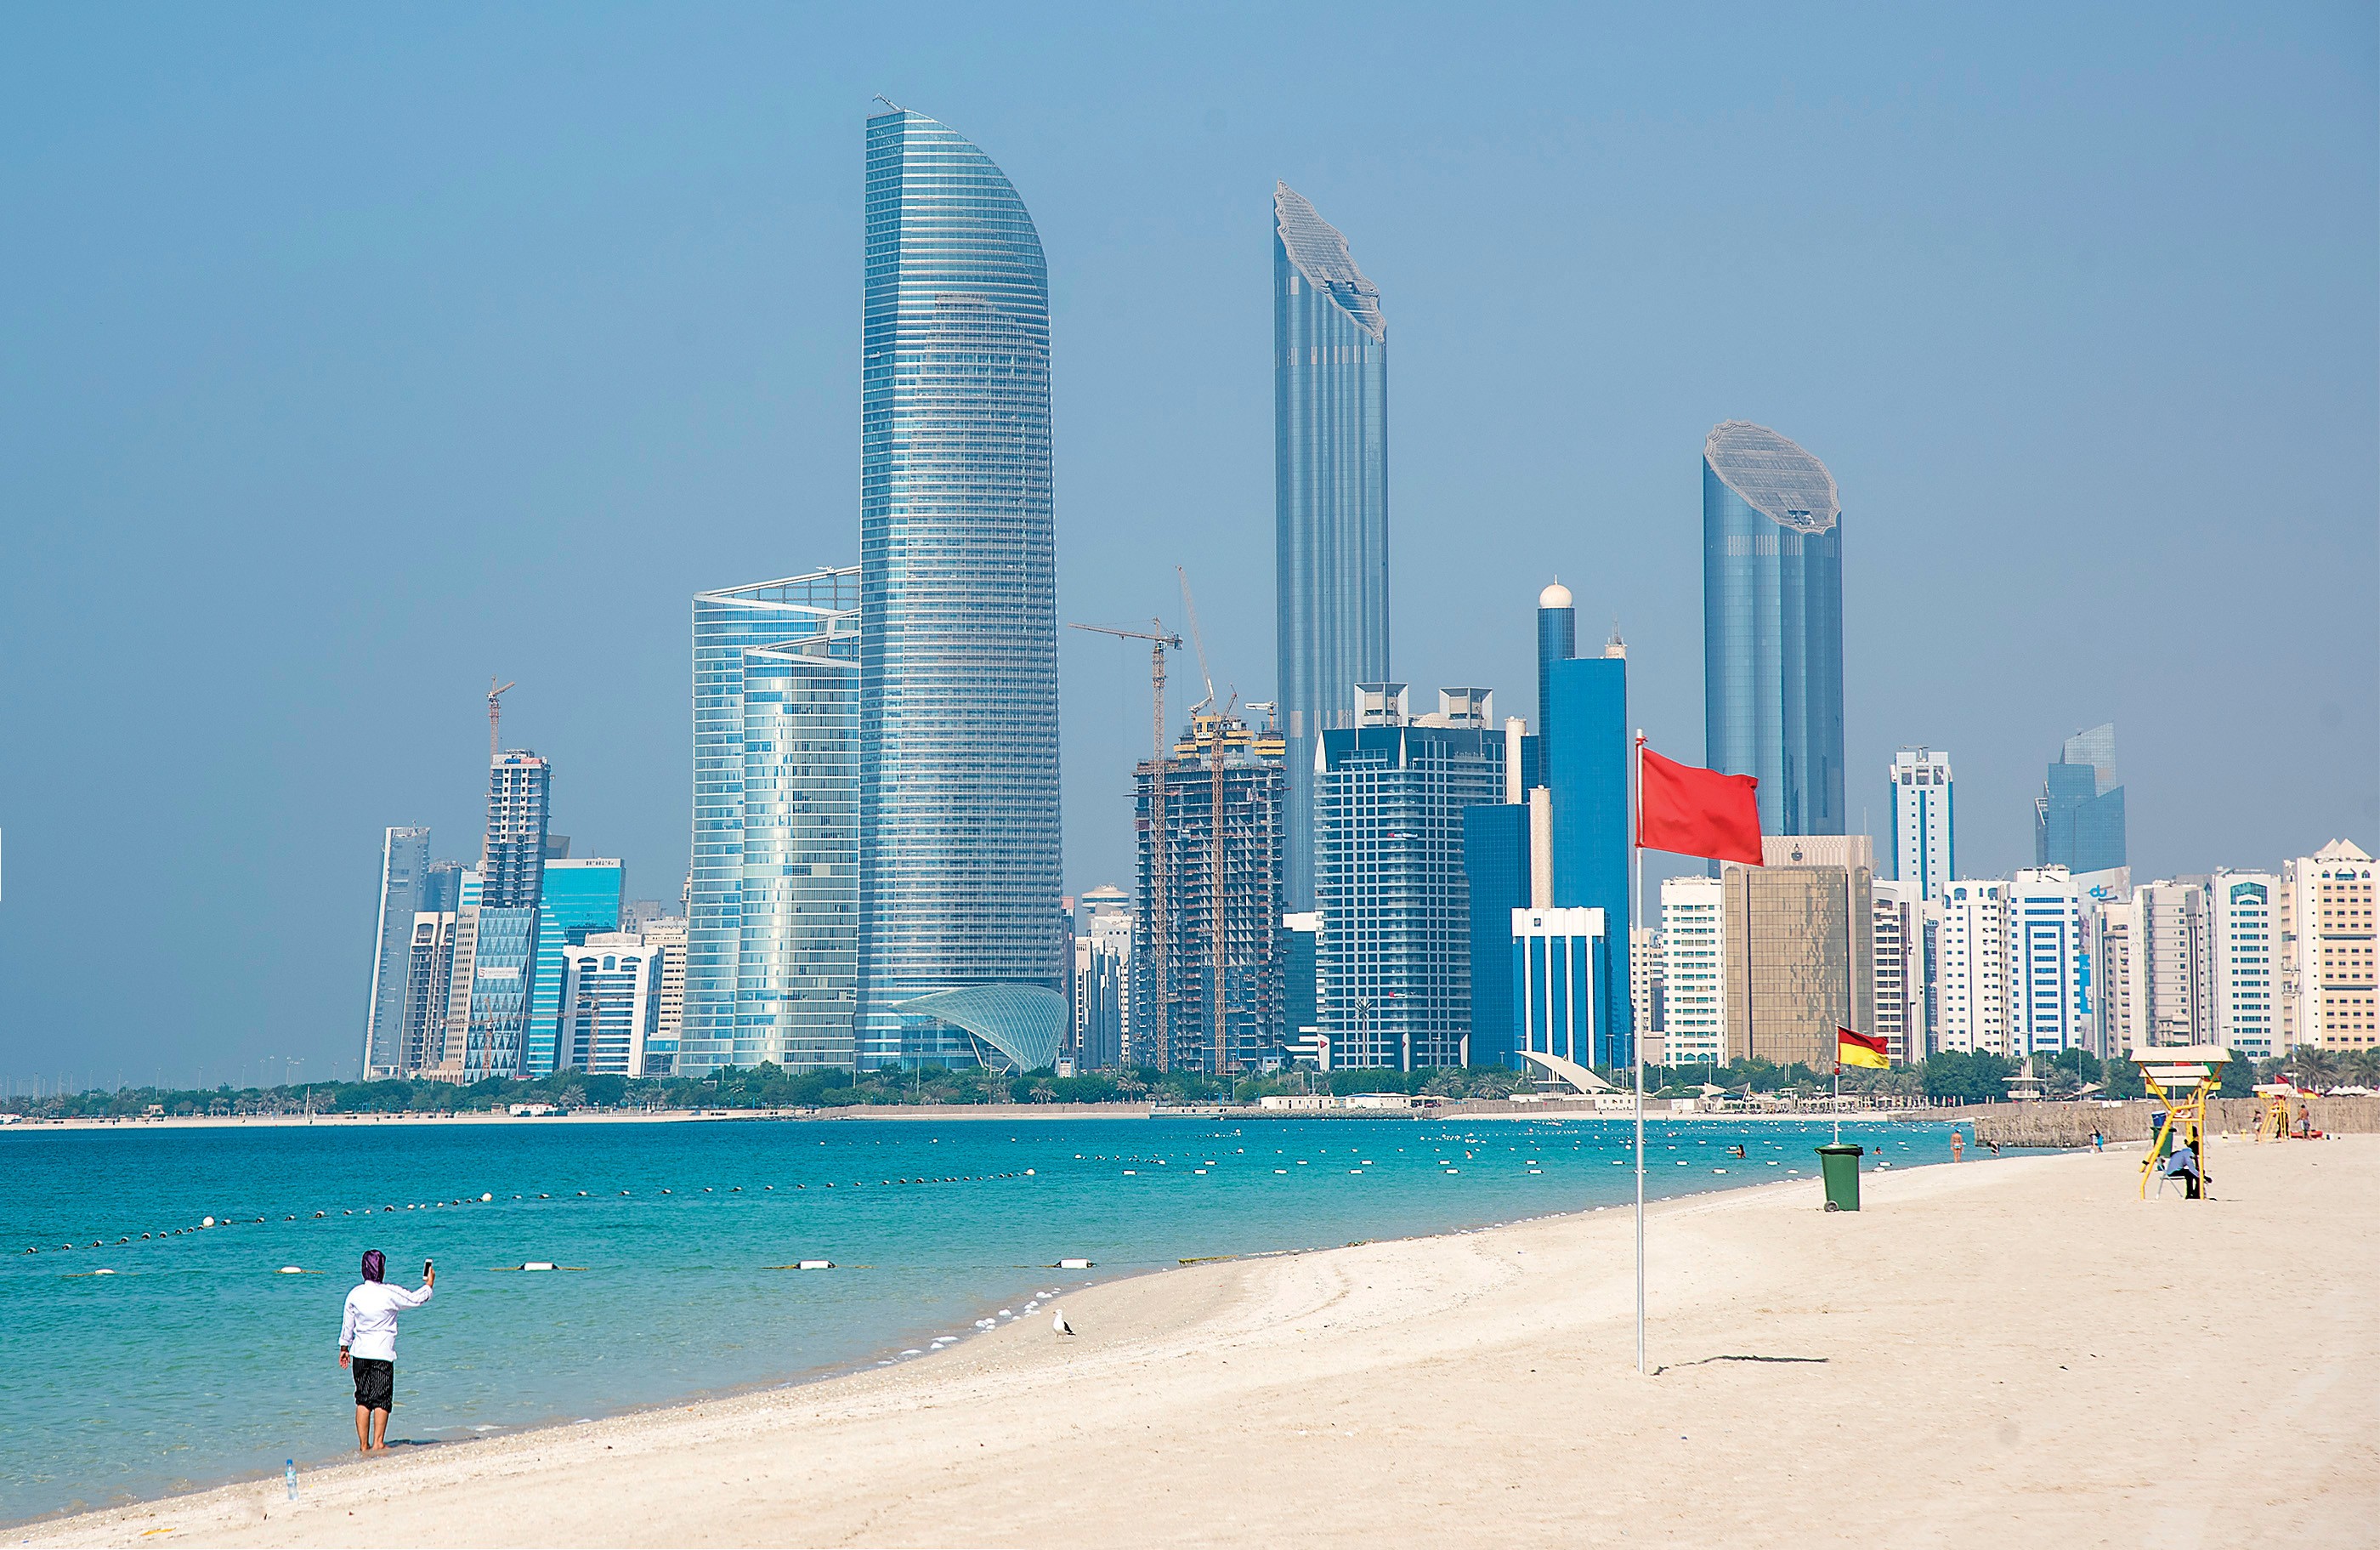 The waterfront skyline of Abu Dhabi, capital of the UAE. Photo: Tim Pile